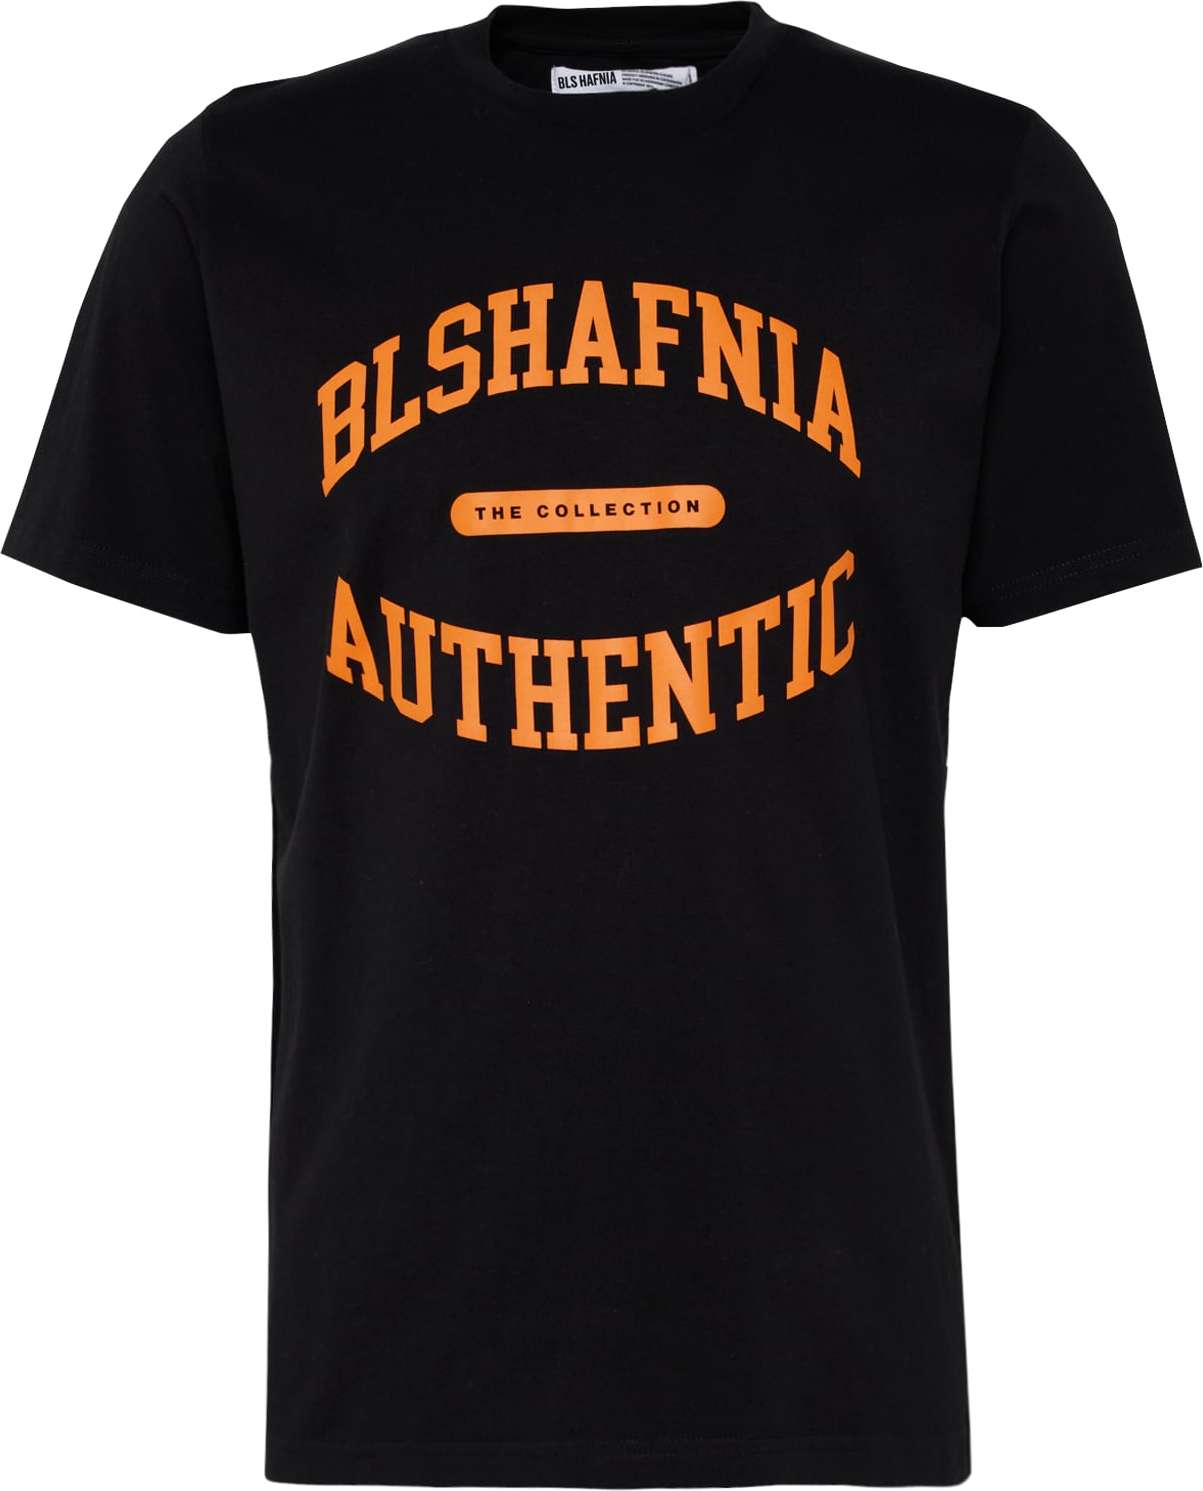 BLS HAFNIA Tričko tmavě oranžová / černá